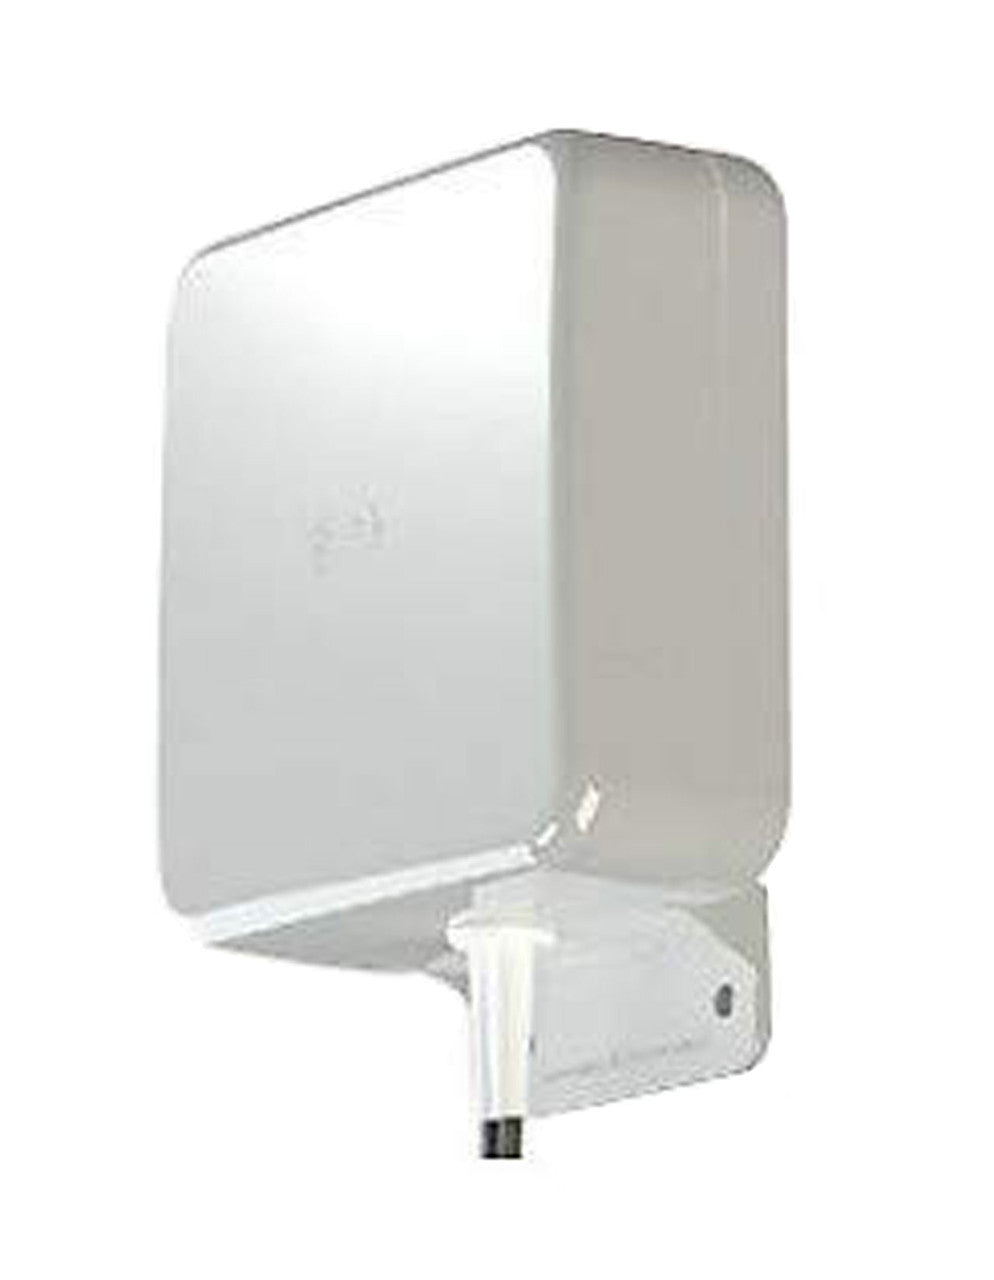 Sierra Wireless AirLink High Gain Directional Antenna - 2xLTE, Wall Mount, 5m, White (6001126)